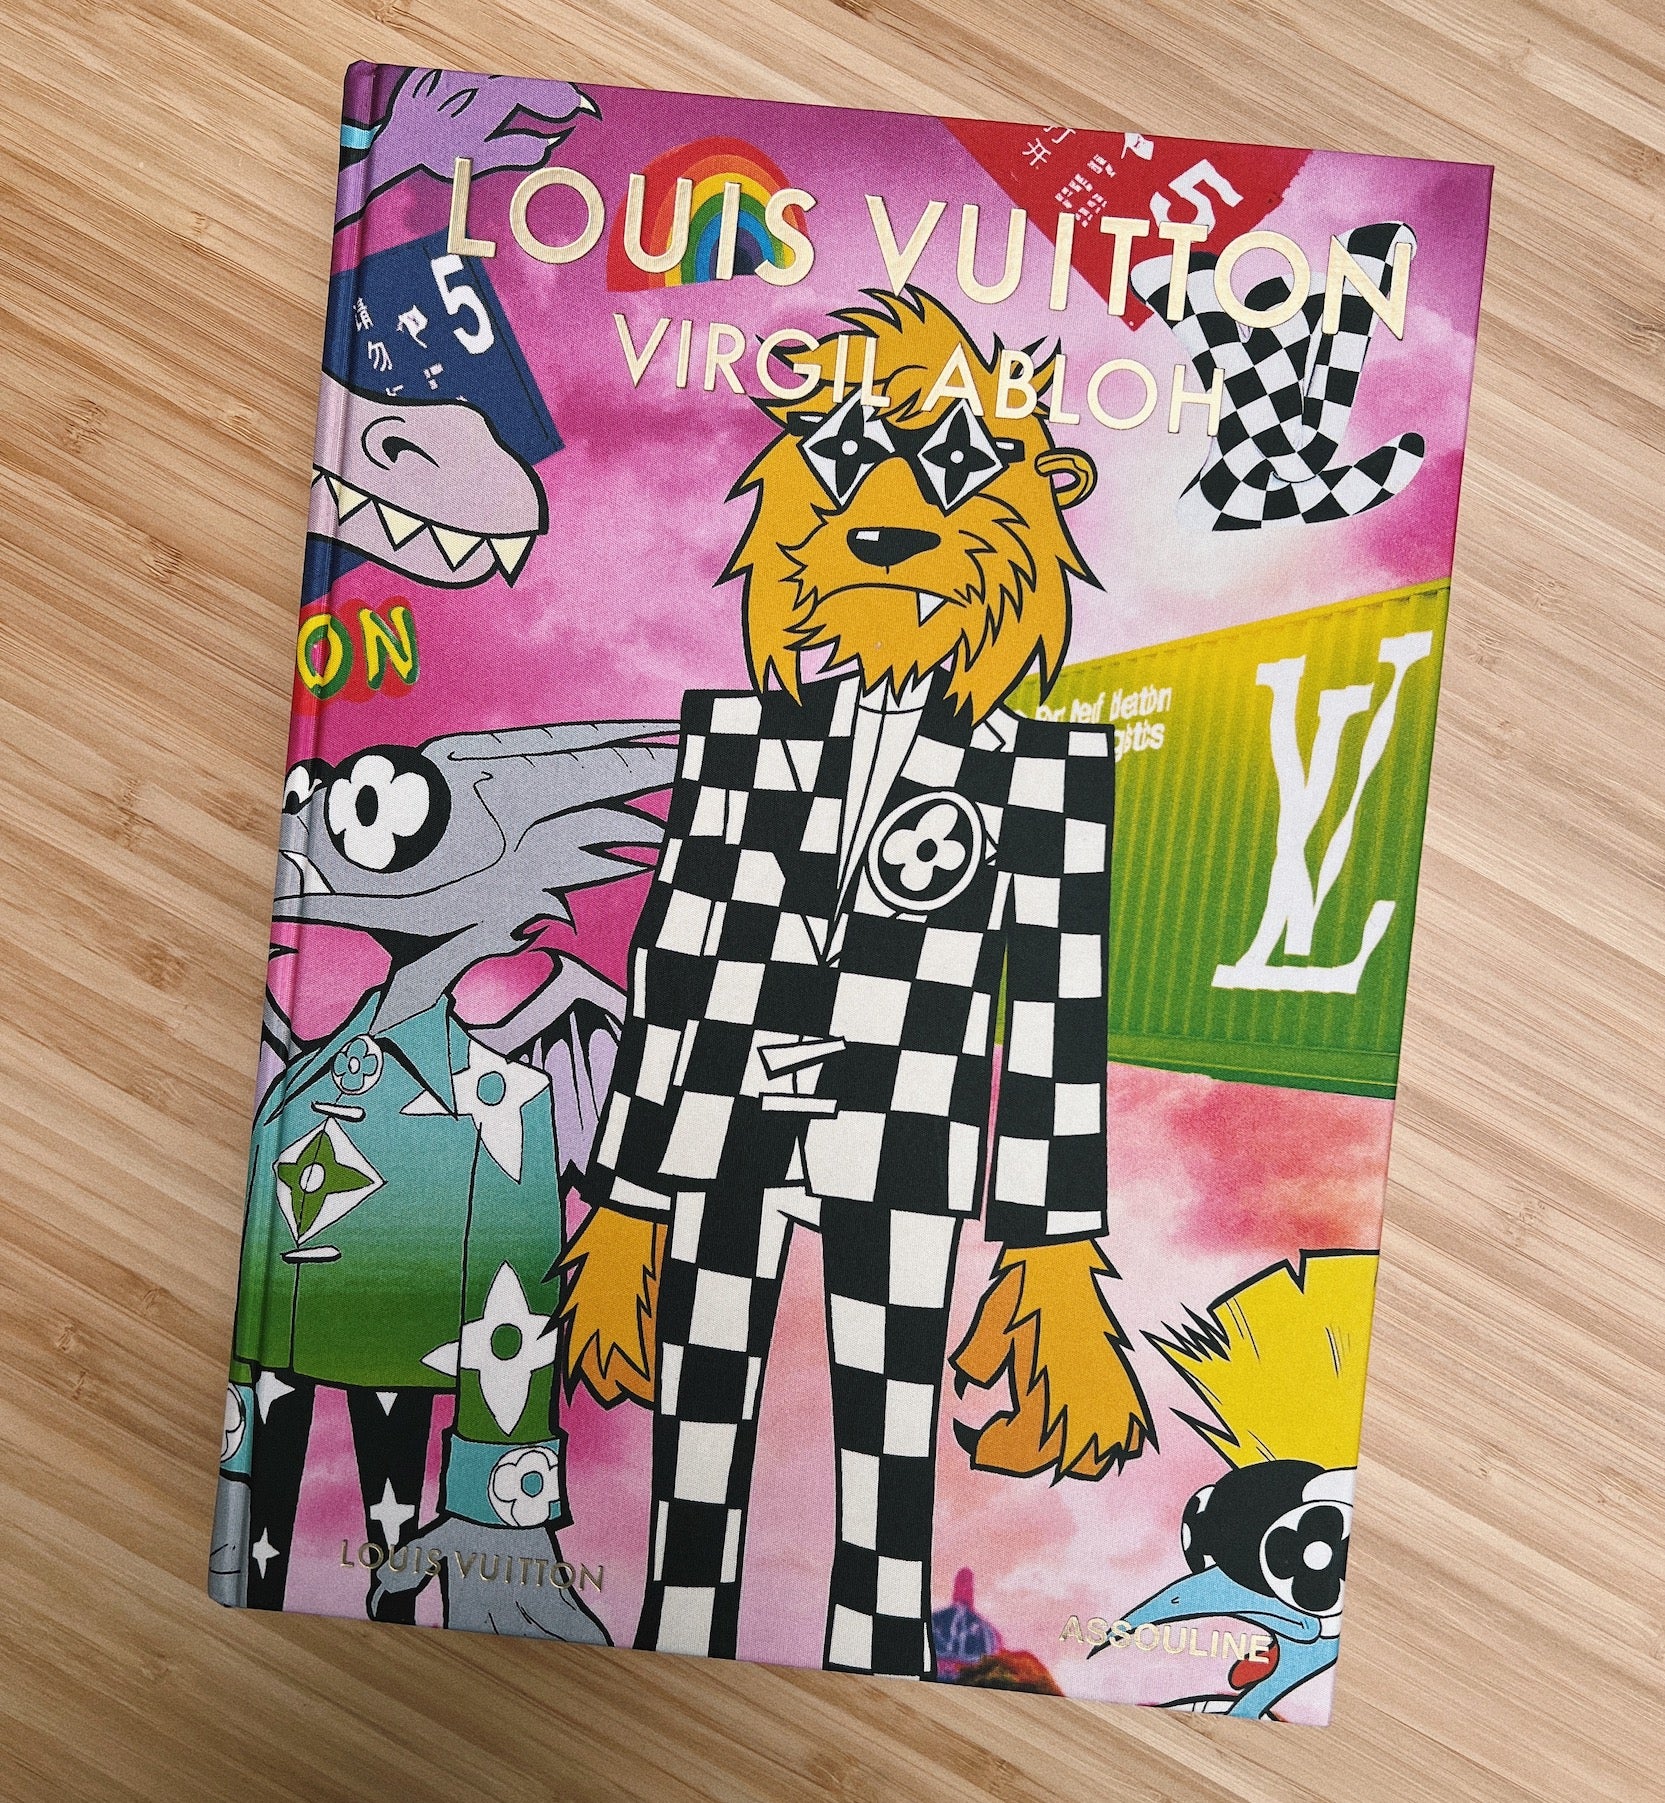 Louis Vuitton Virgil Abloh Book